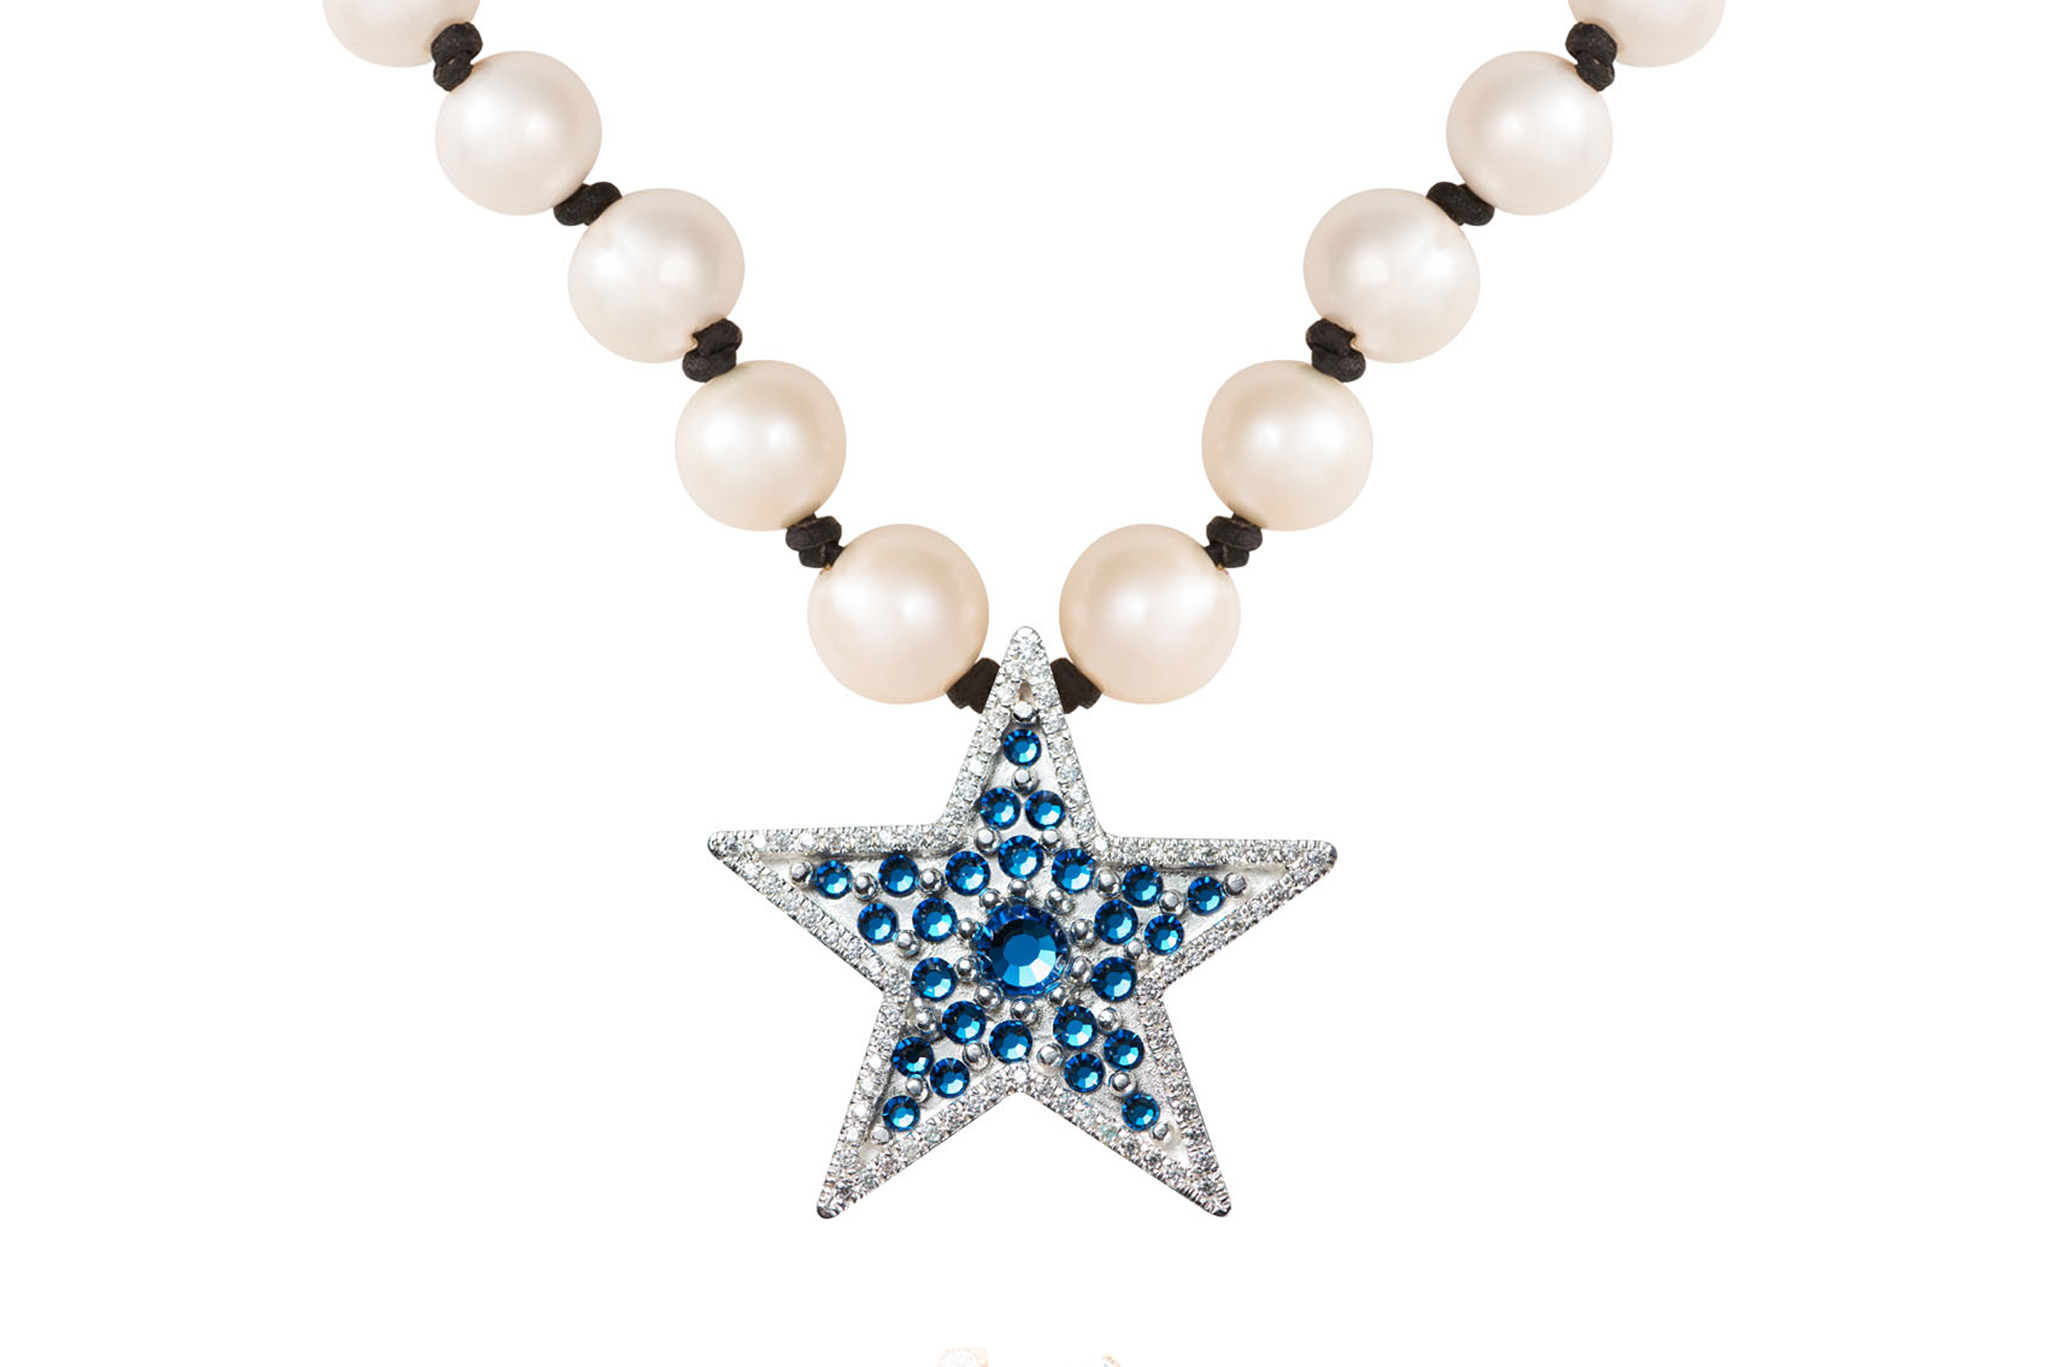 Dallas Cowboys Beads with Medallion Mardi Gras Style - Sports Fan Shop